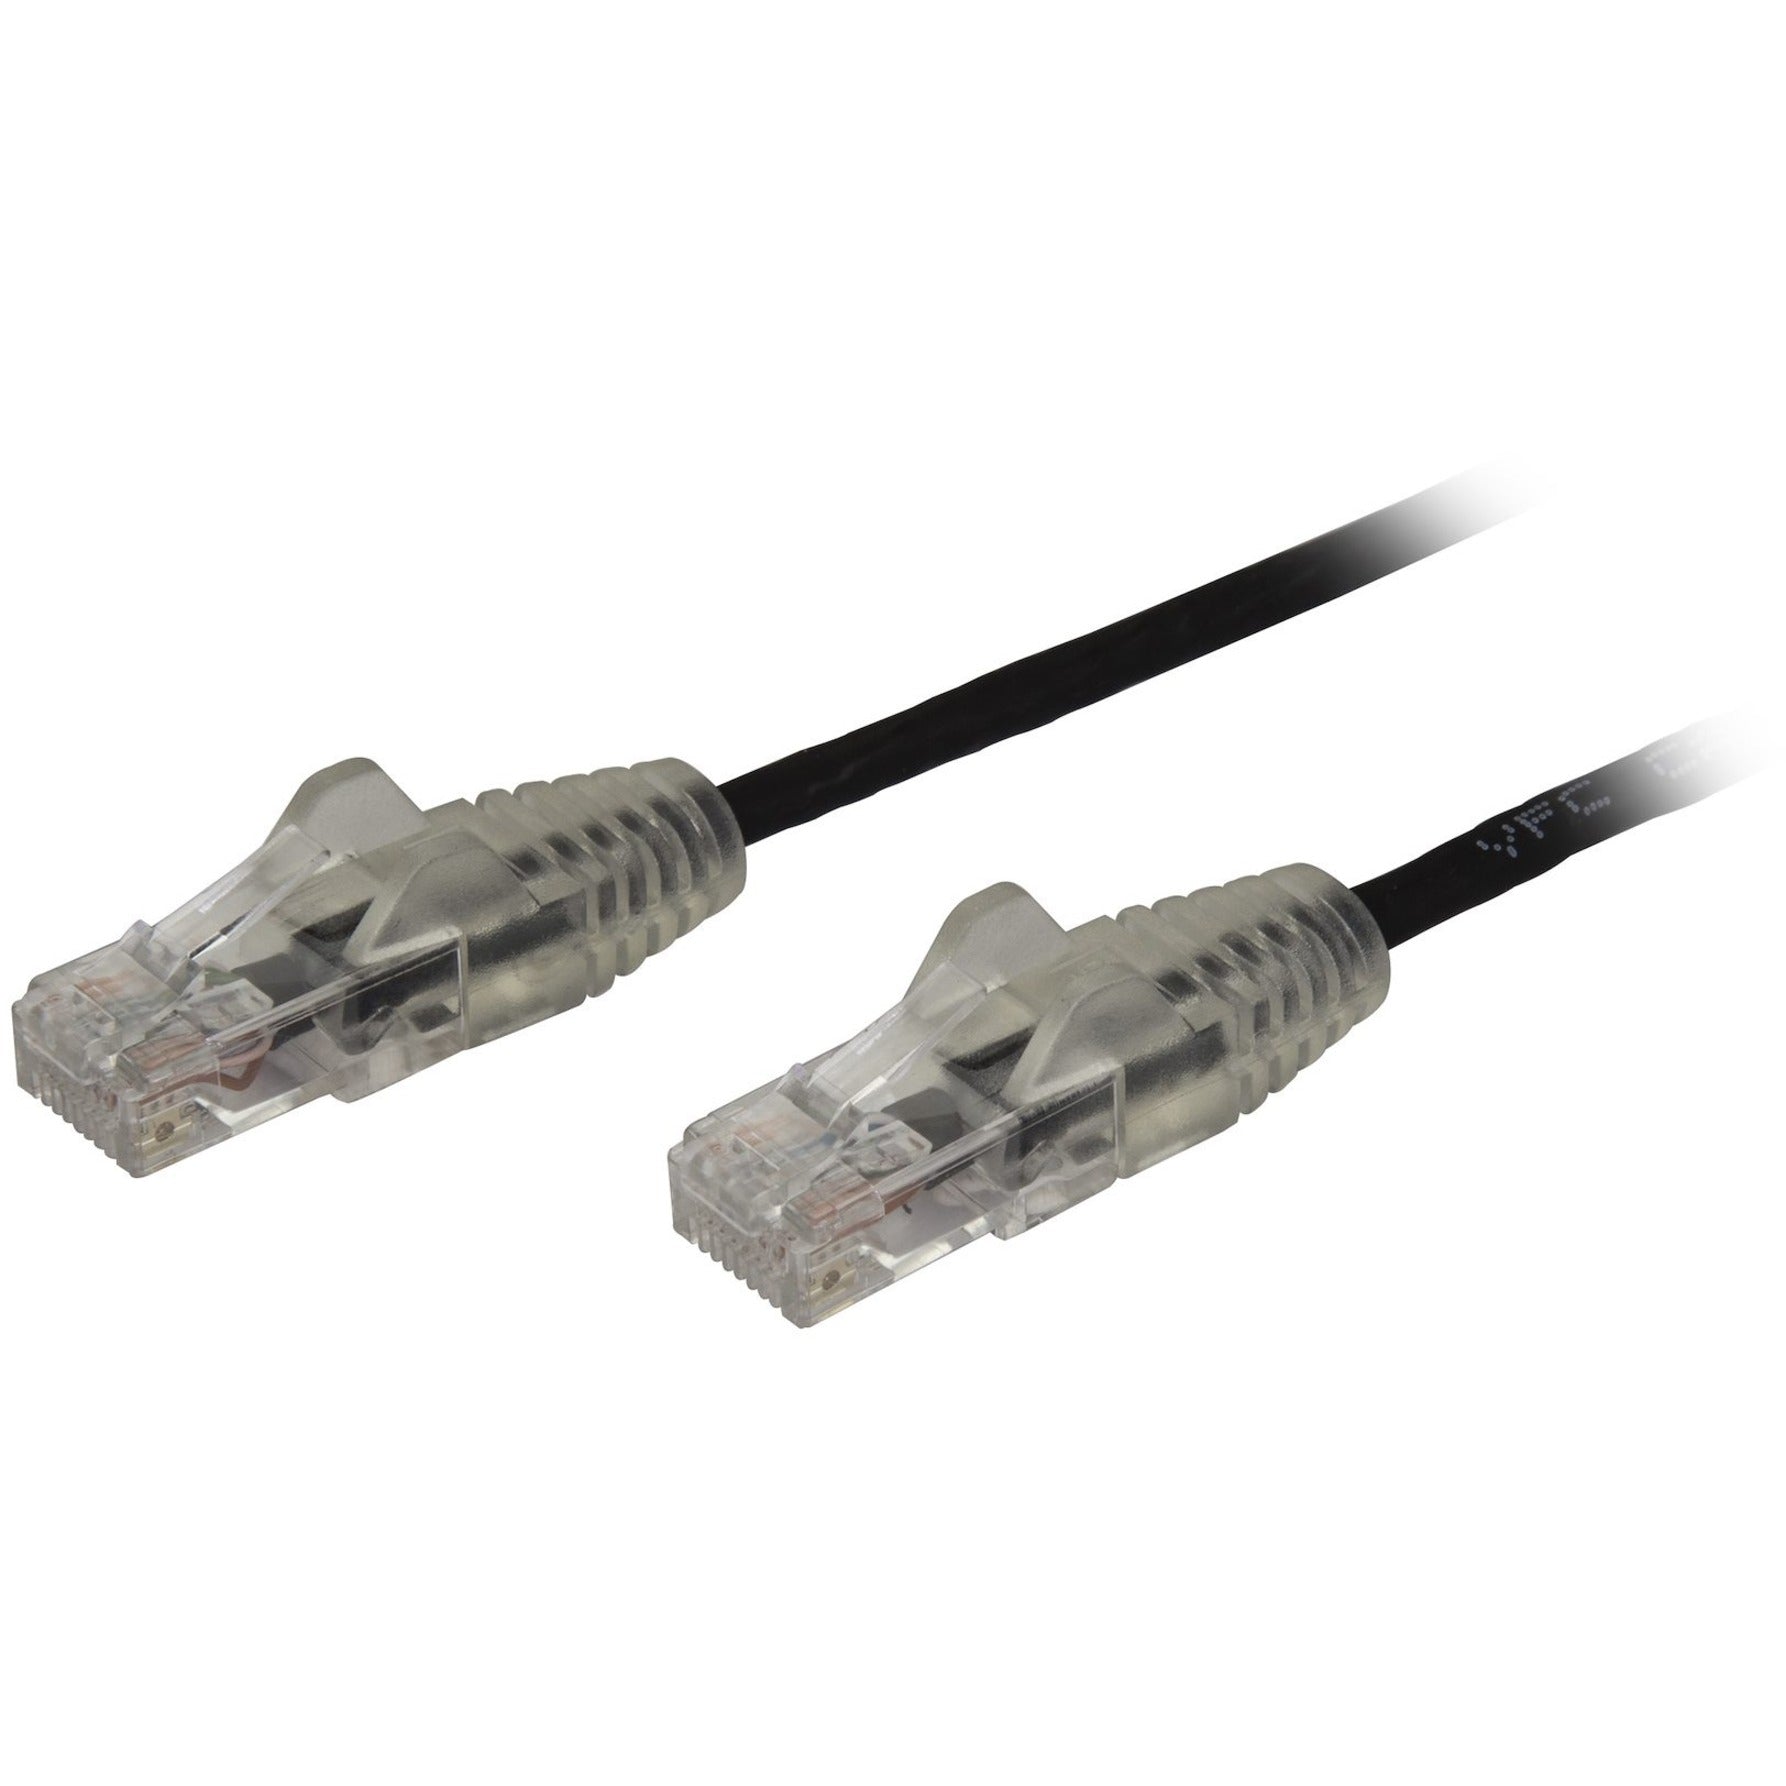 StarTech.com N6PAT3BKS Cat.6 Patch Network Cable, 3 ft Black Ethernet Cable - Slim, Snagless RJ45 Connectors, Cat6 Cable, Cat6 Patch Cable, Cat6 Network Cable